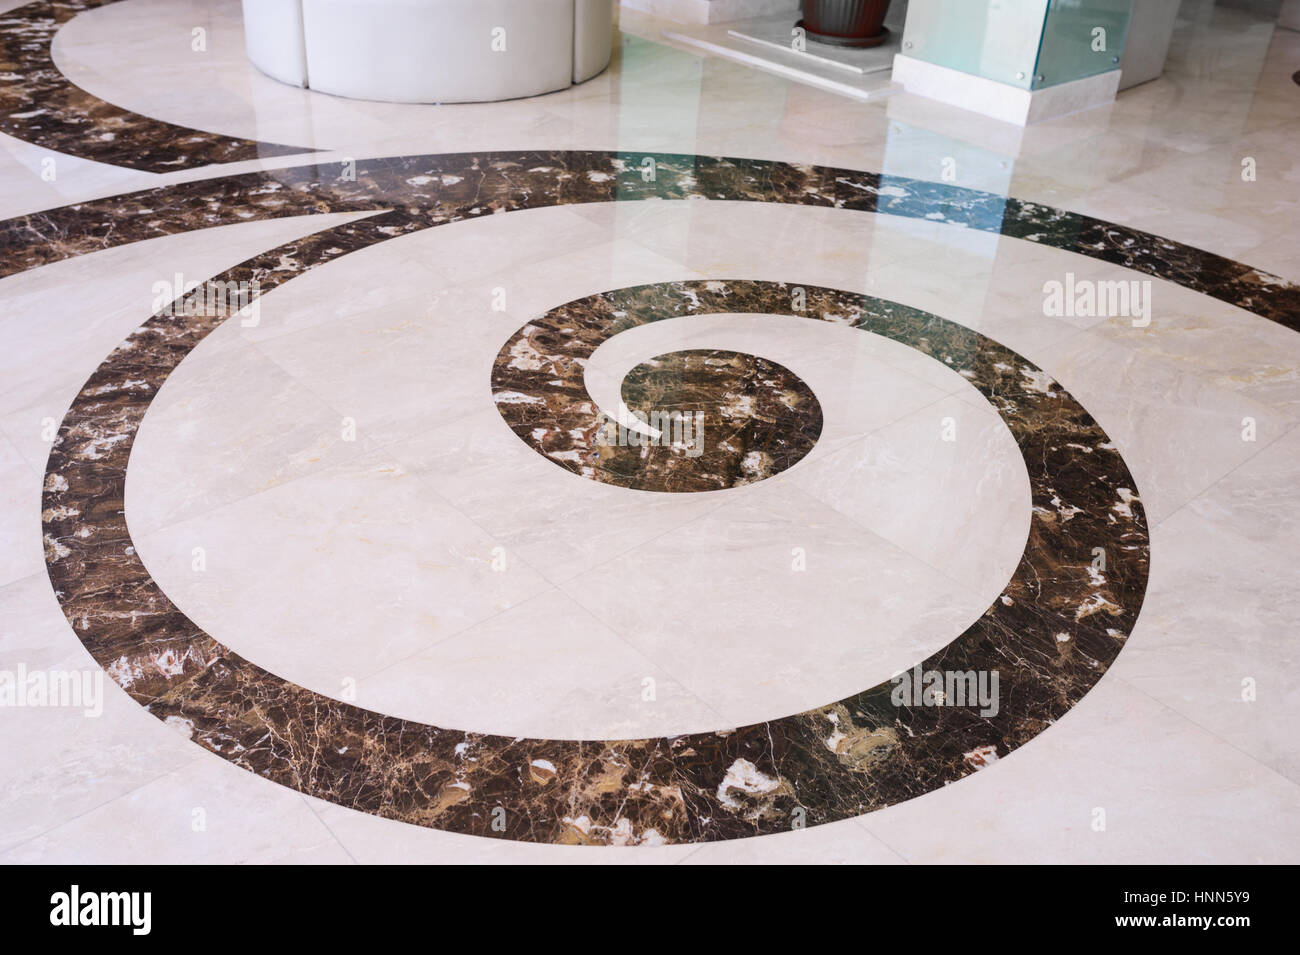 La texture de la sol en granit avec un motif abstrait Banque D'Images